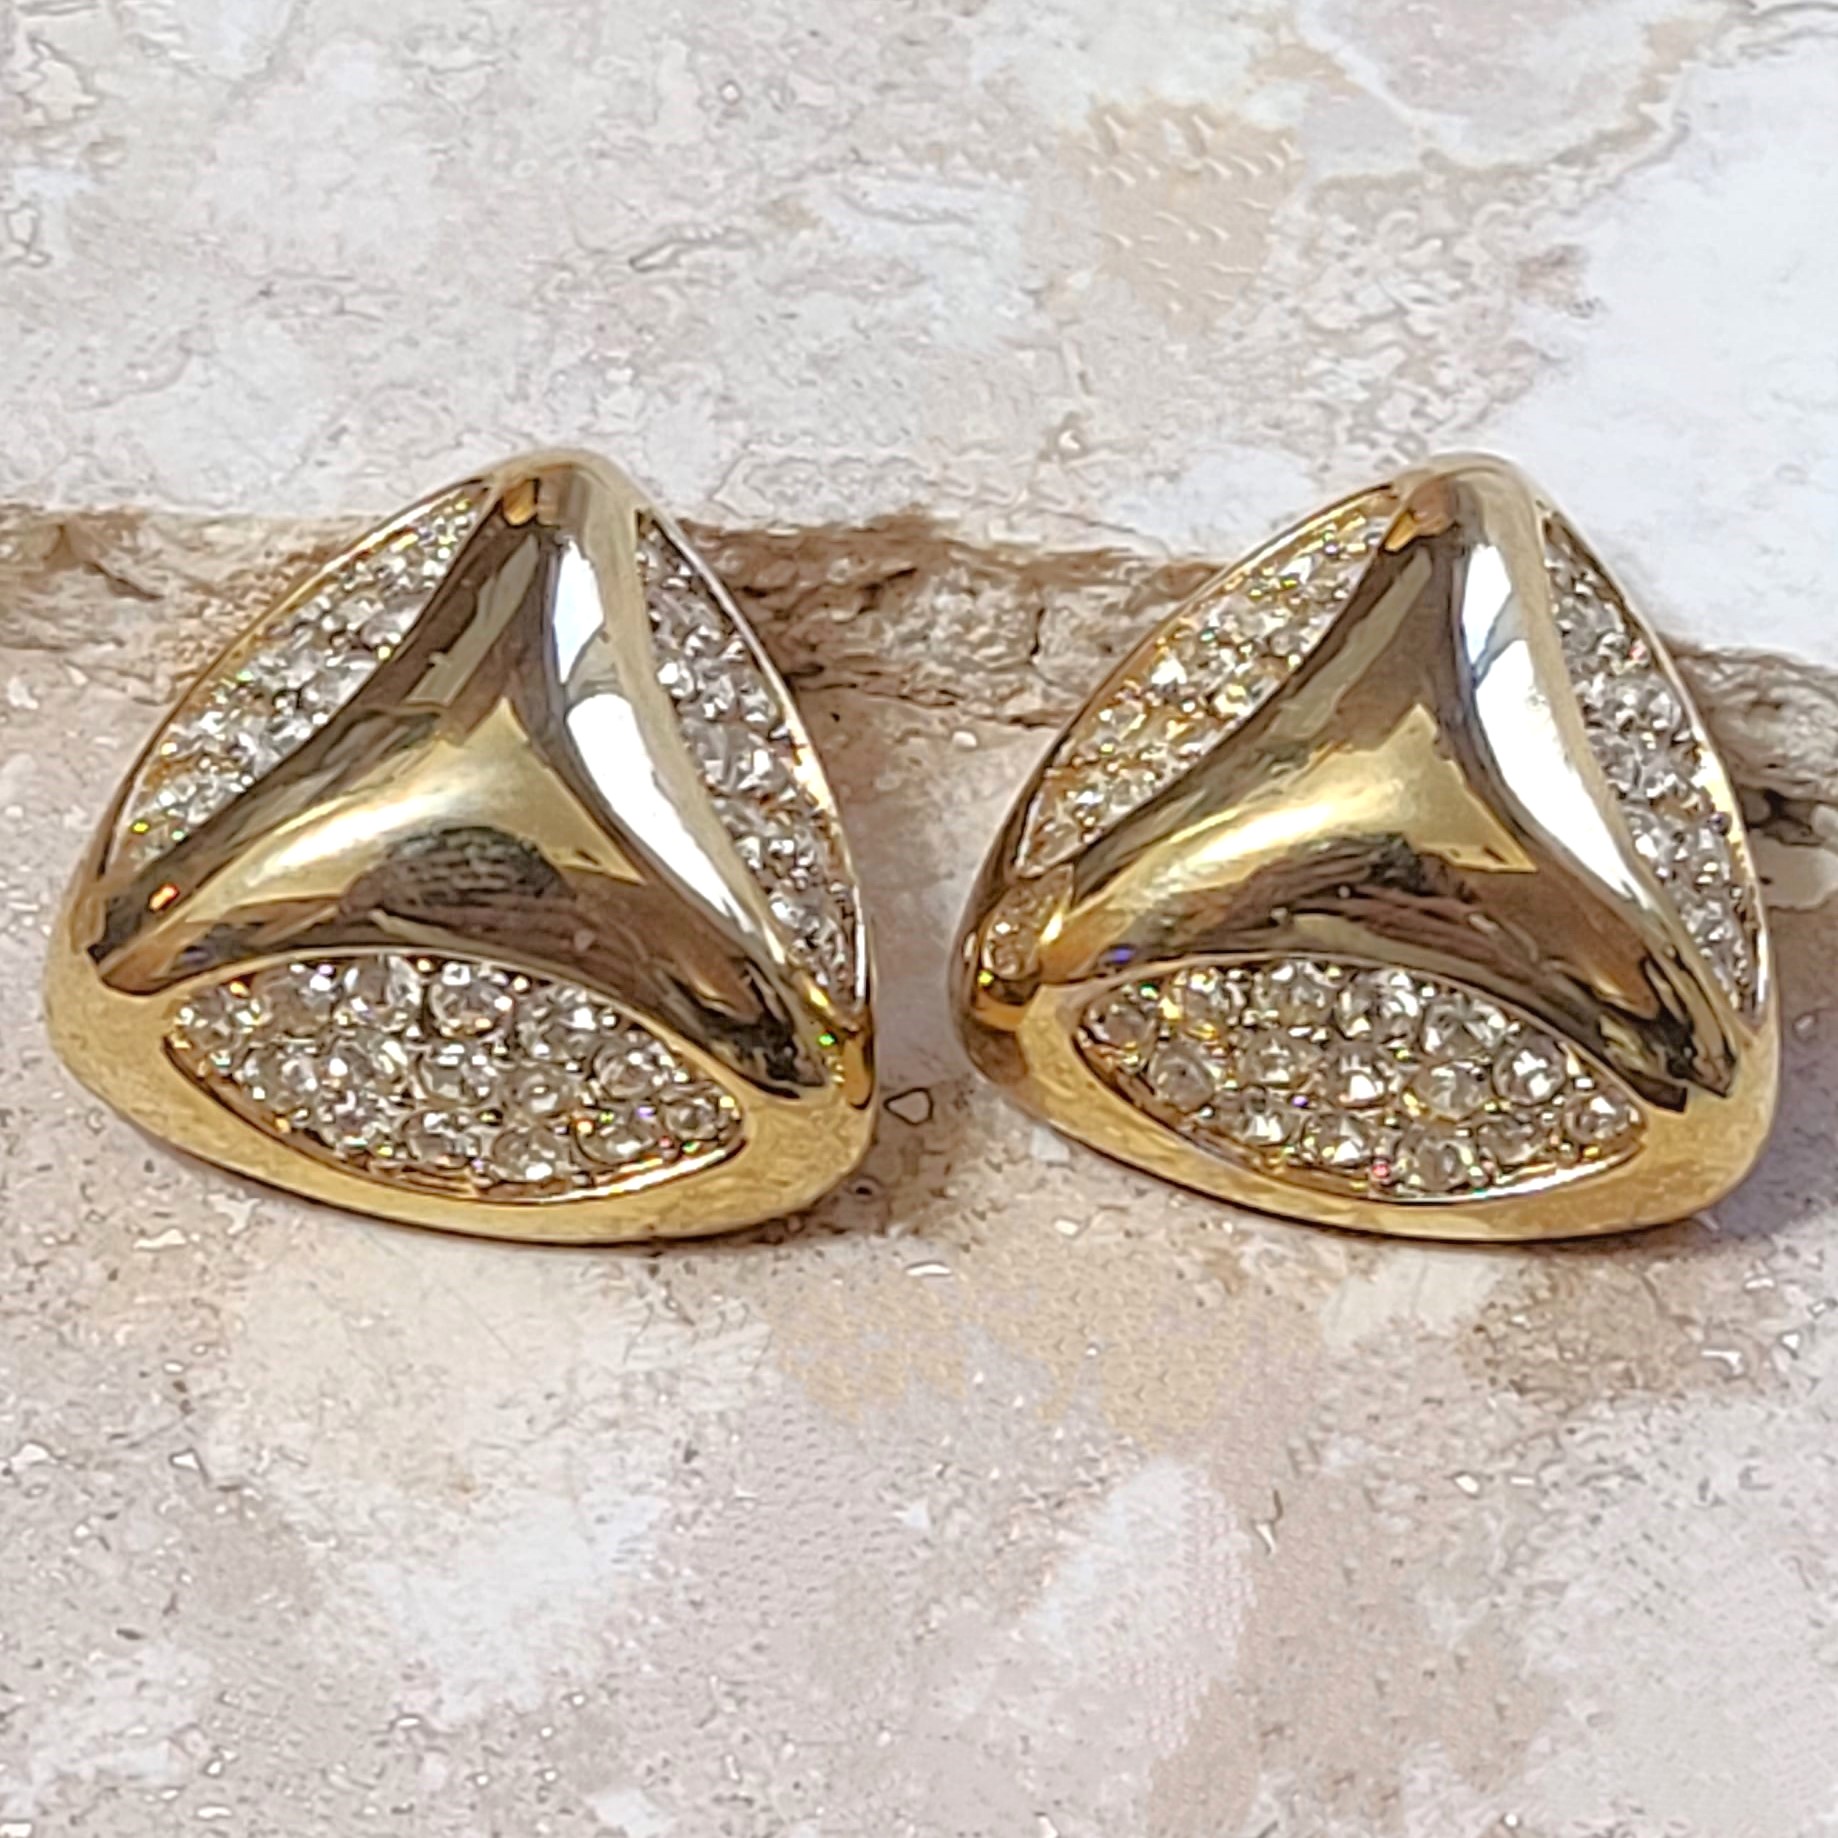 Nina Ricci earrings, clip on earrings, goldtone and rhinestones, signed designer